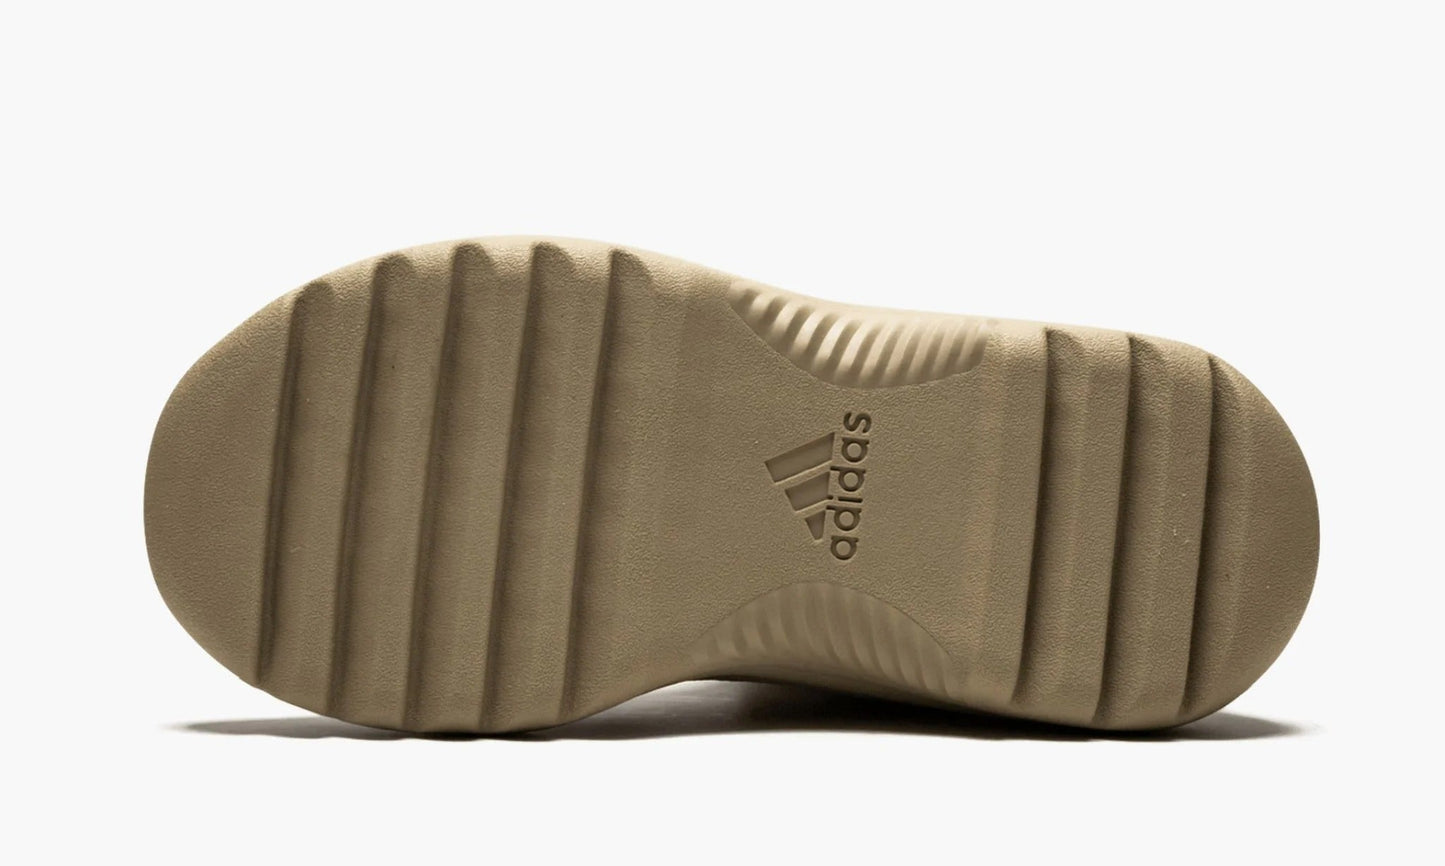 Adidas Yeezy Desert Boot Rock - EG6462 | The Sortage